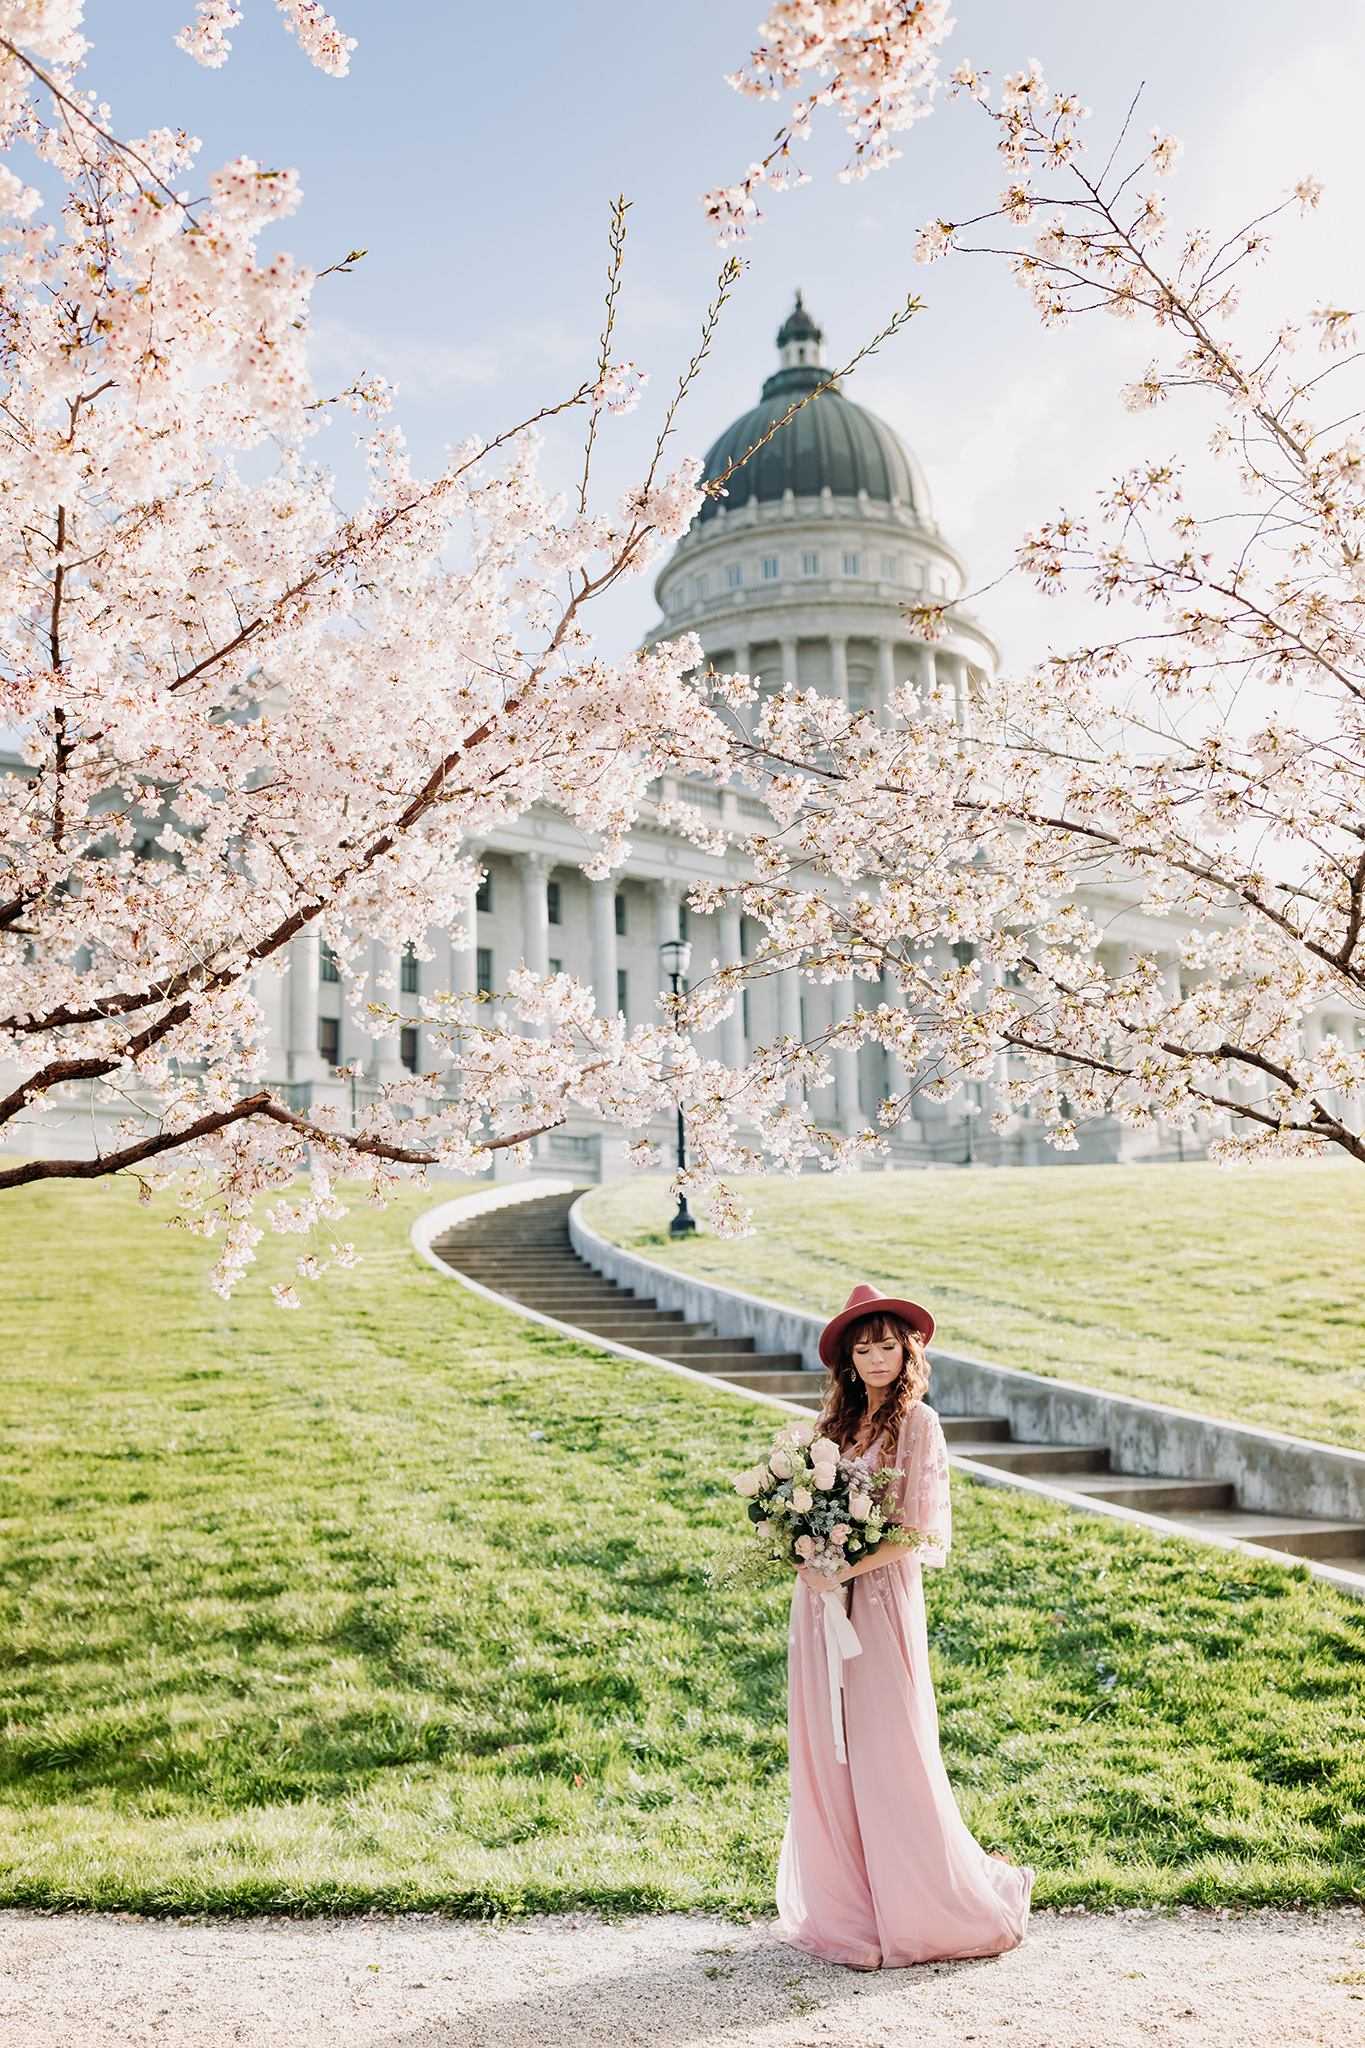 Utah State Capitol Cherry Blossoms photo shoot in Salt Lake City, Utah in spring.